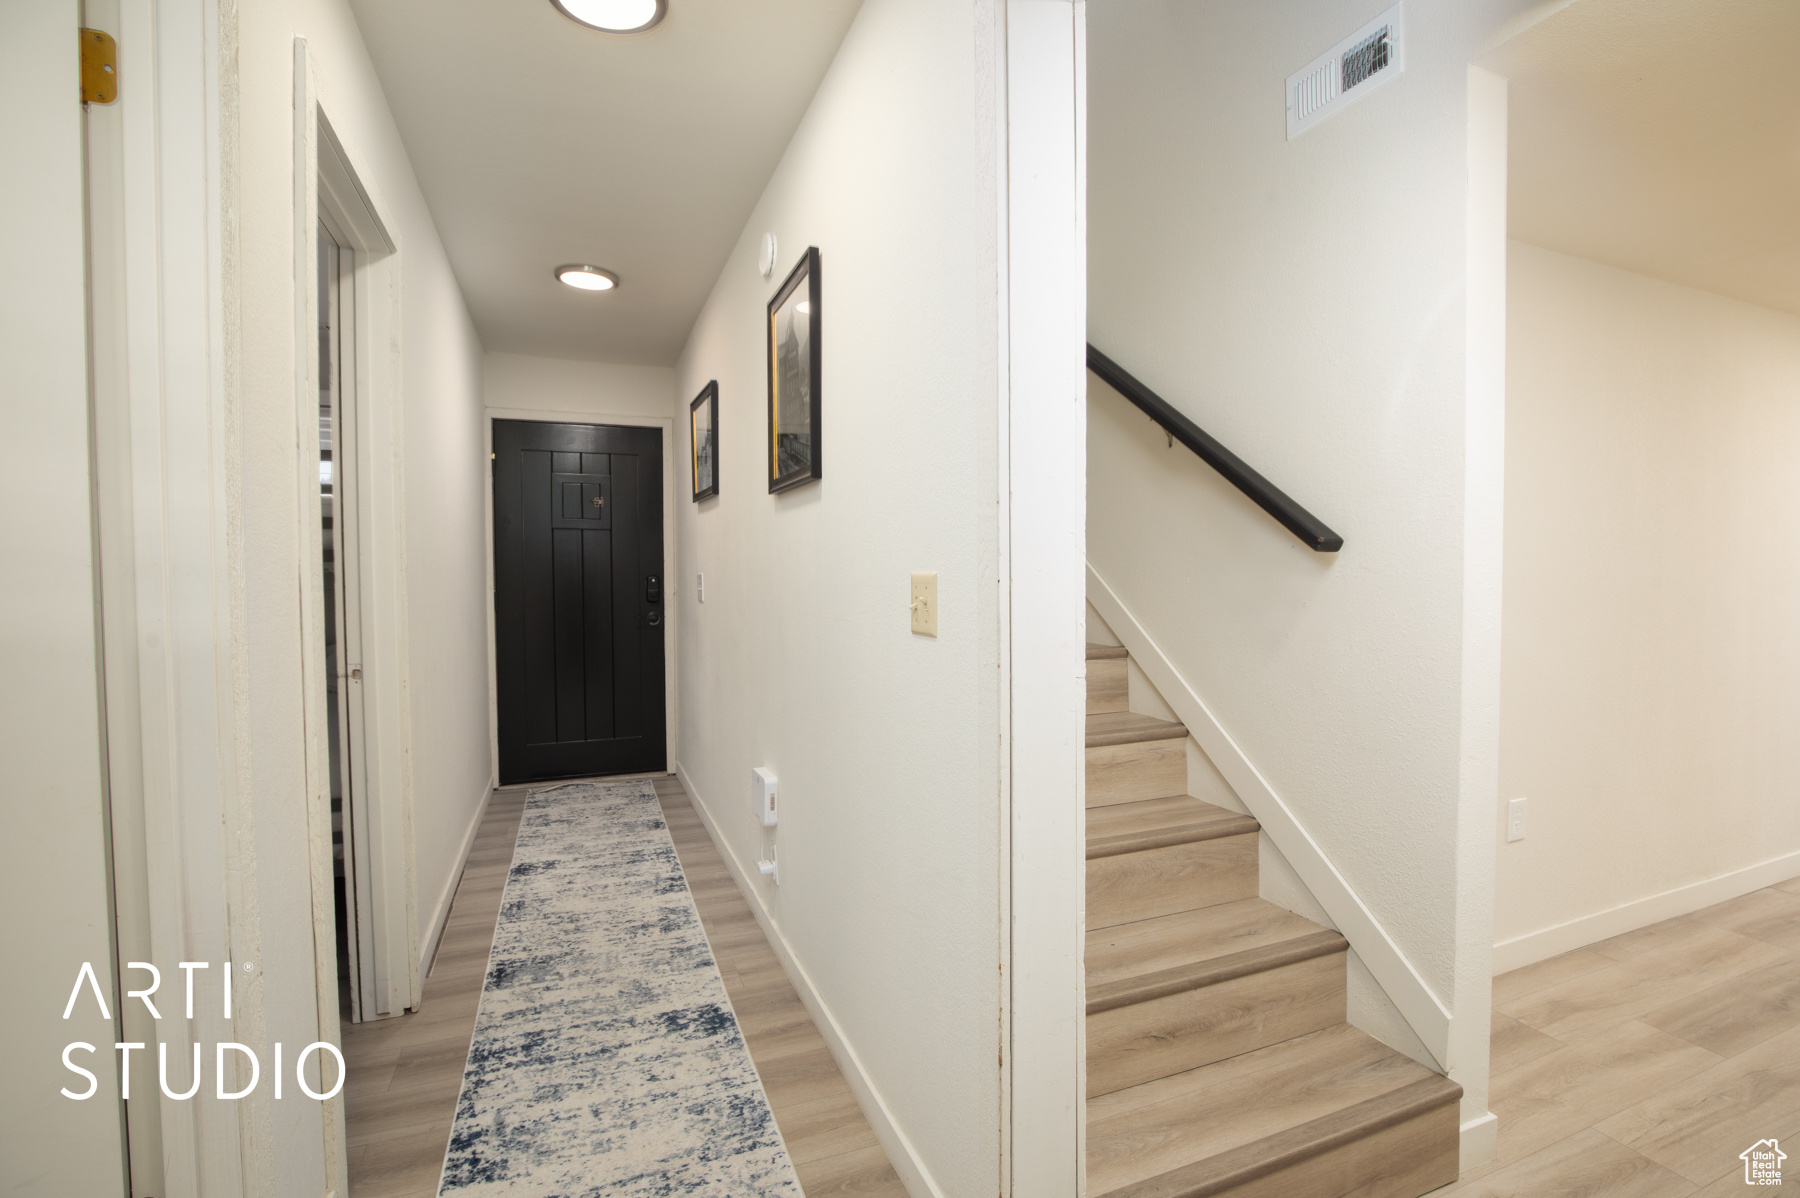 Entry corridor featuring light wood-style floors